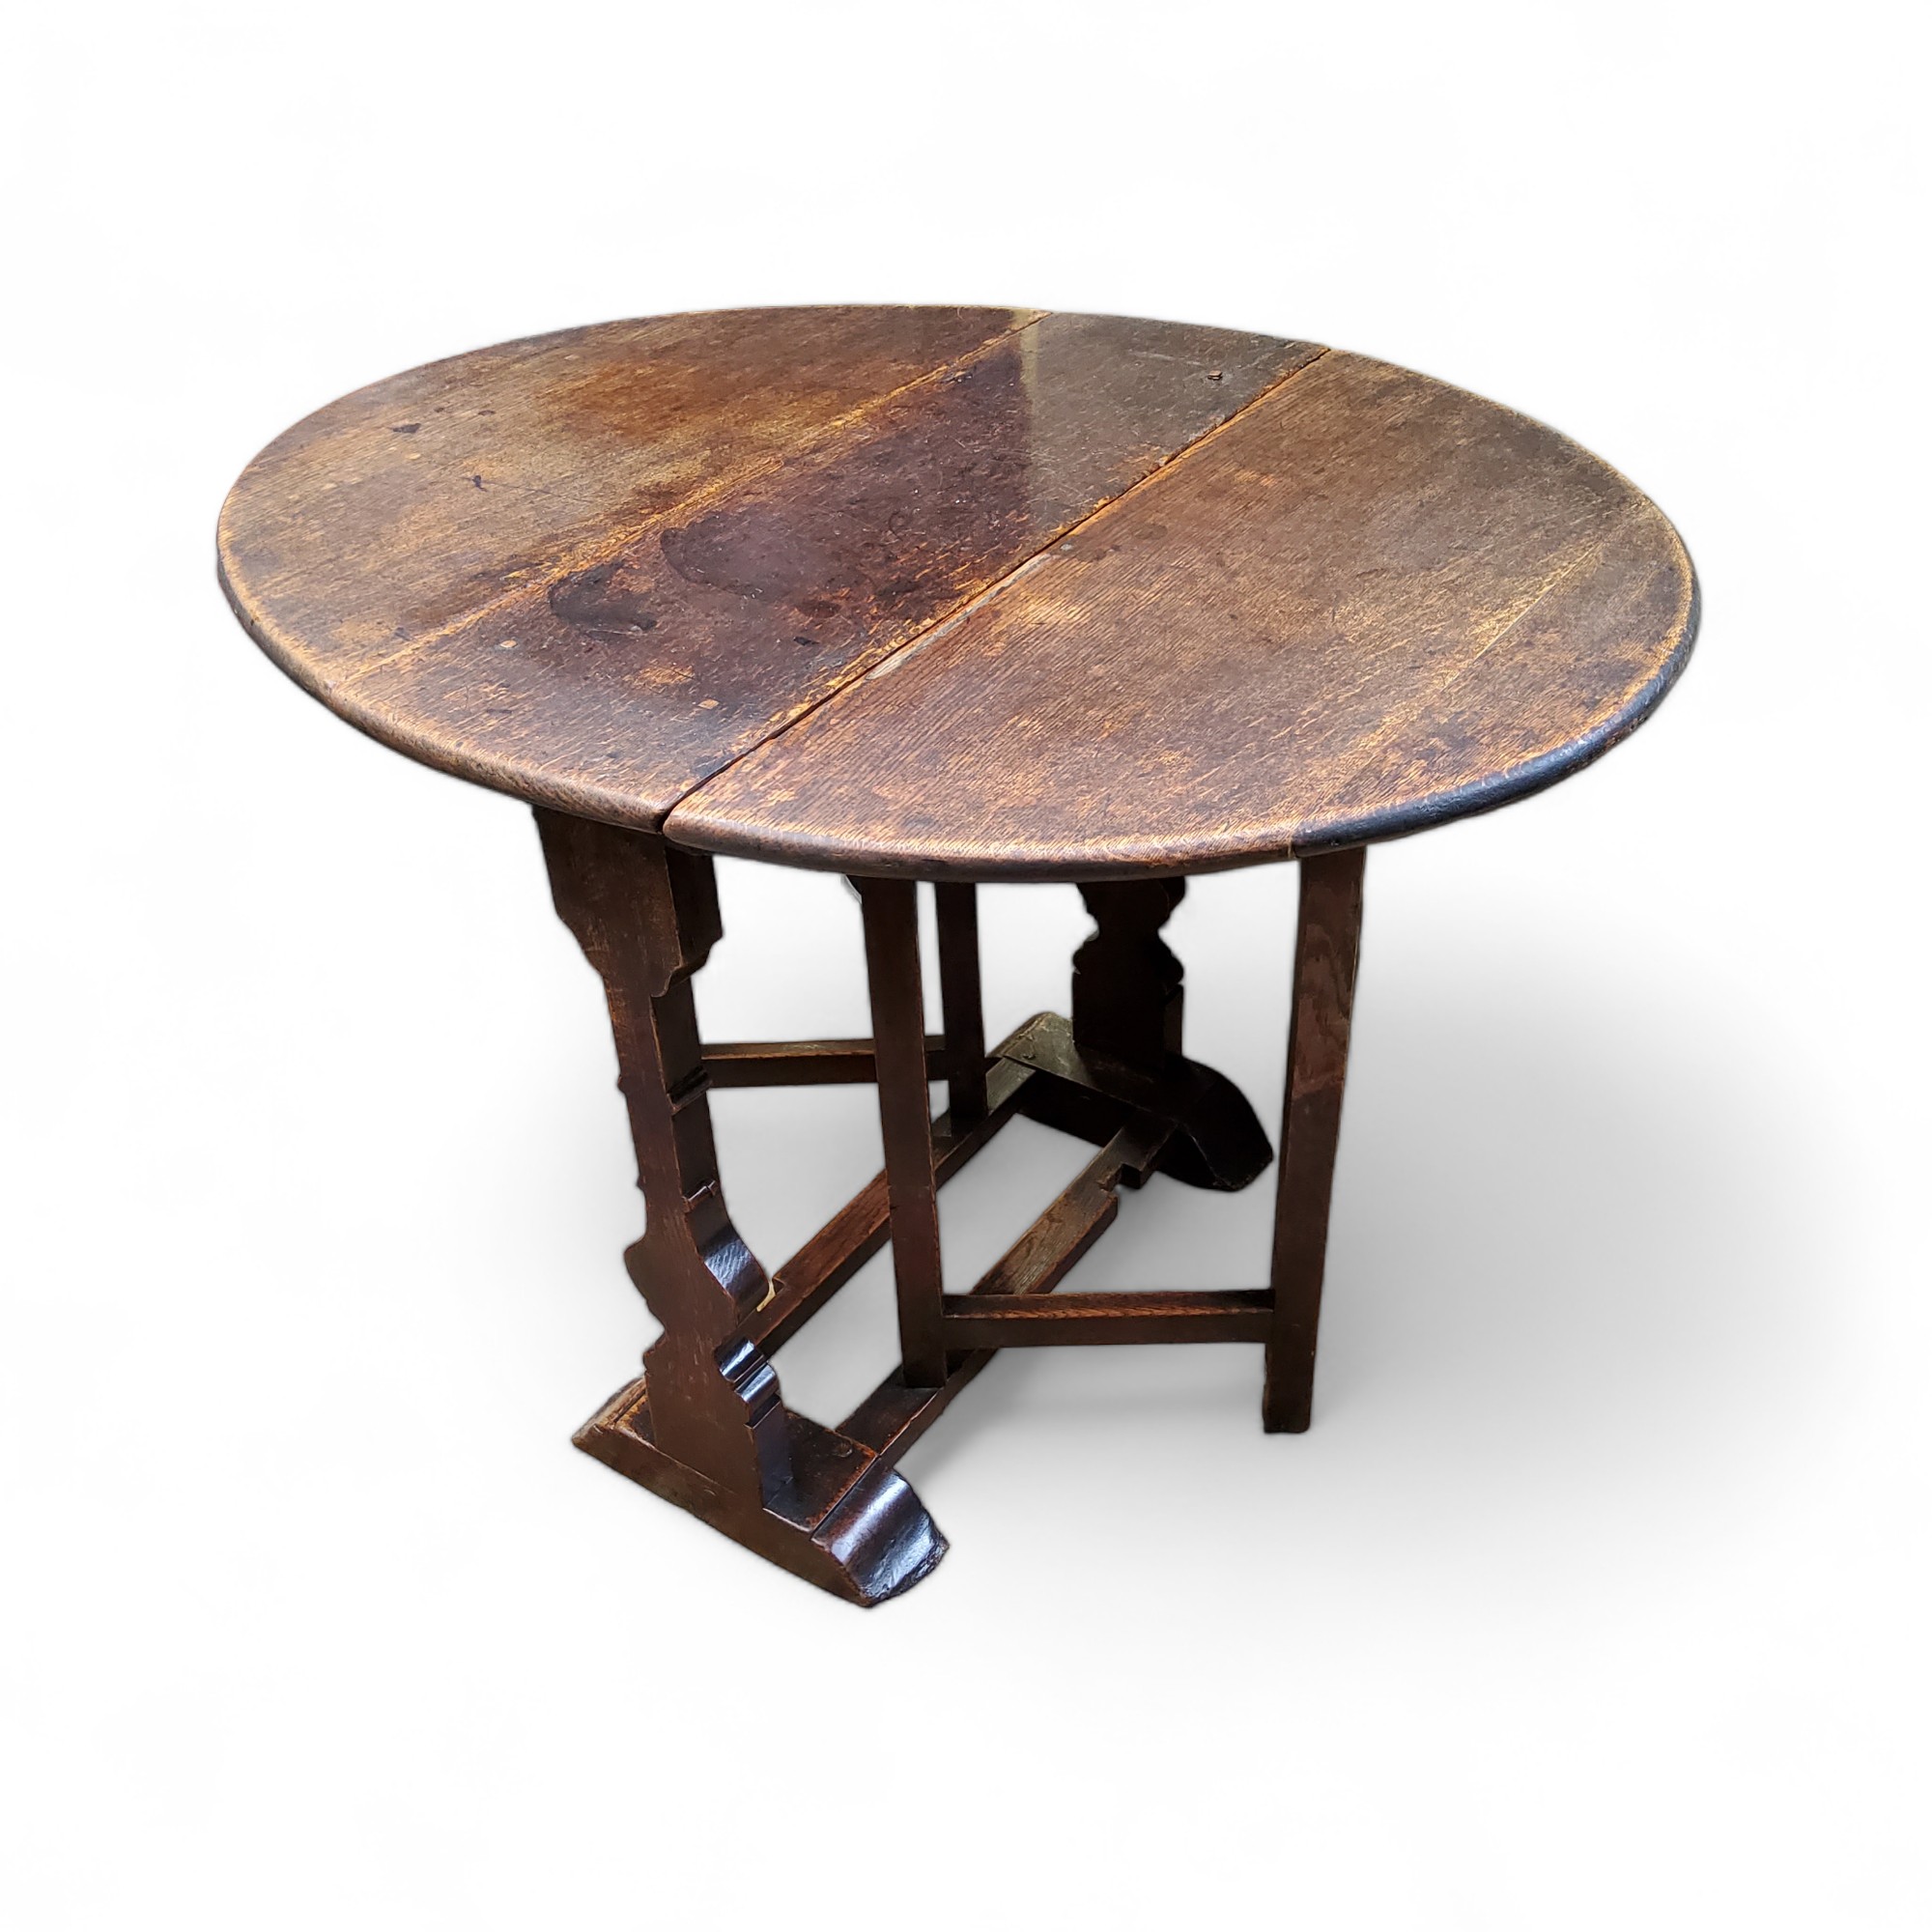 A small George III oak gateleg tavern table, c.1780 Dimensions: 68cm high, 74cm wide, 23.5cm - Image 2 of 2